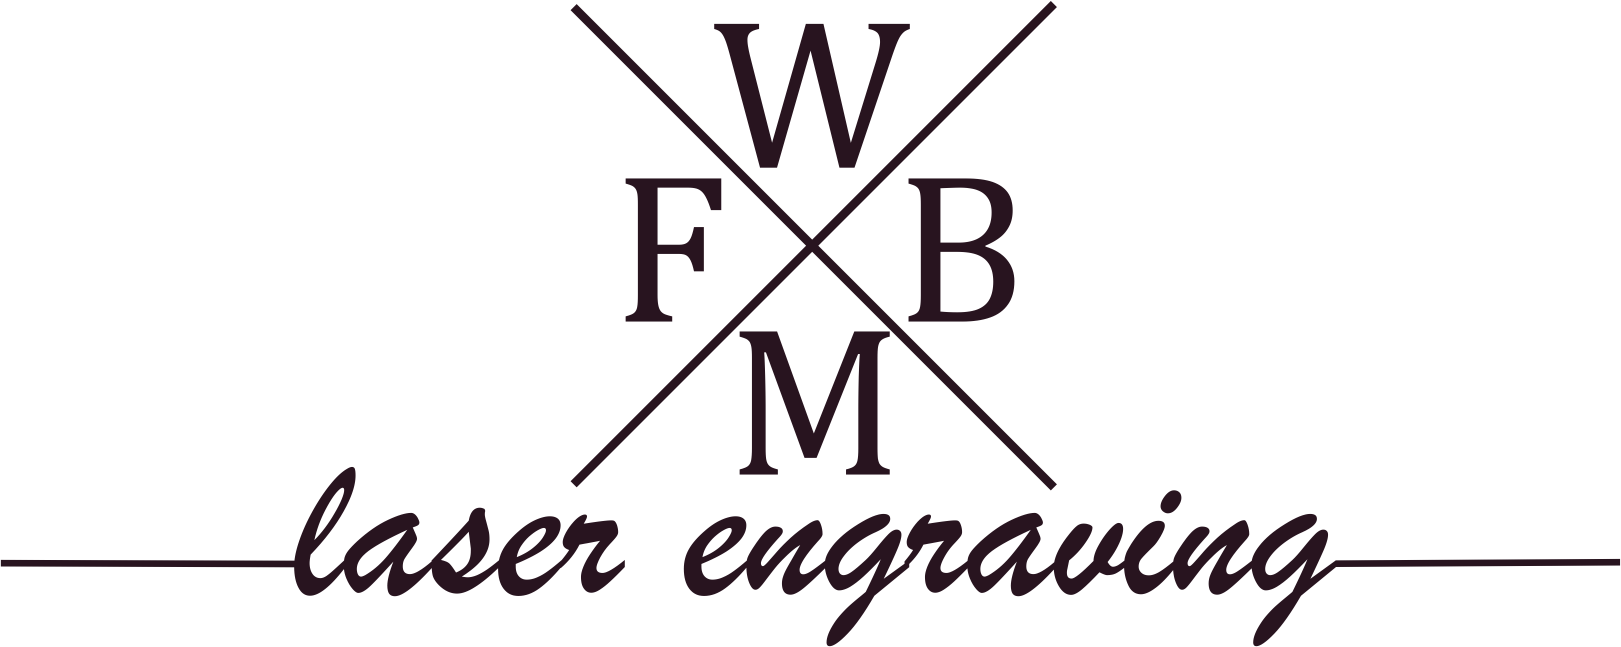 WFBM Laser Engraving